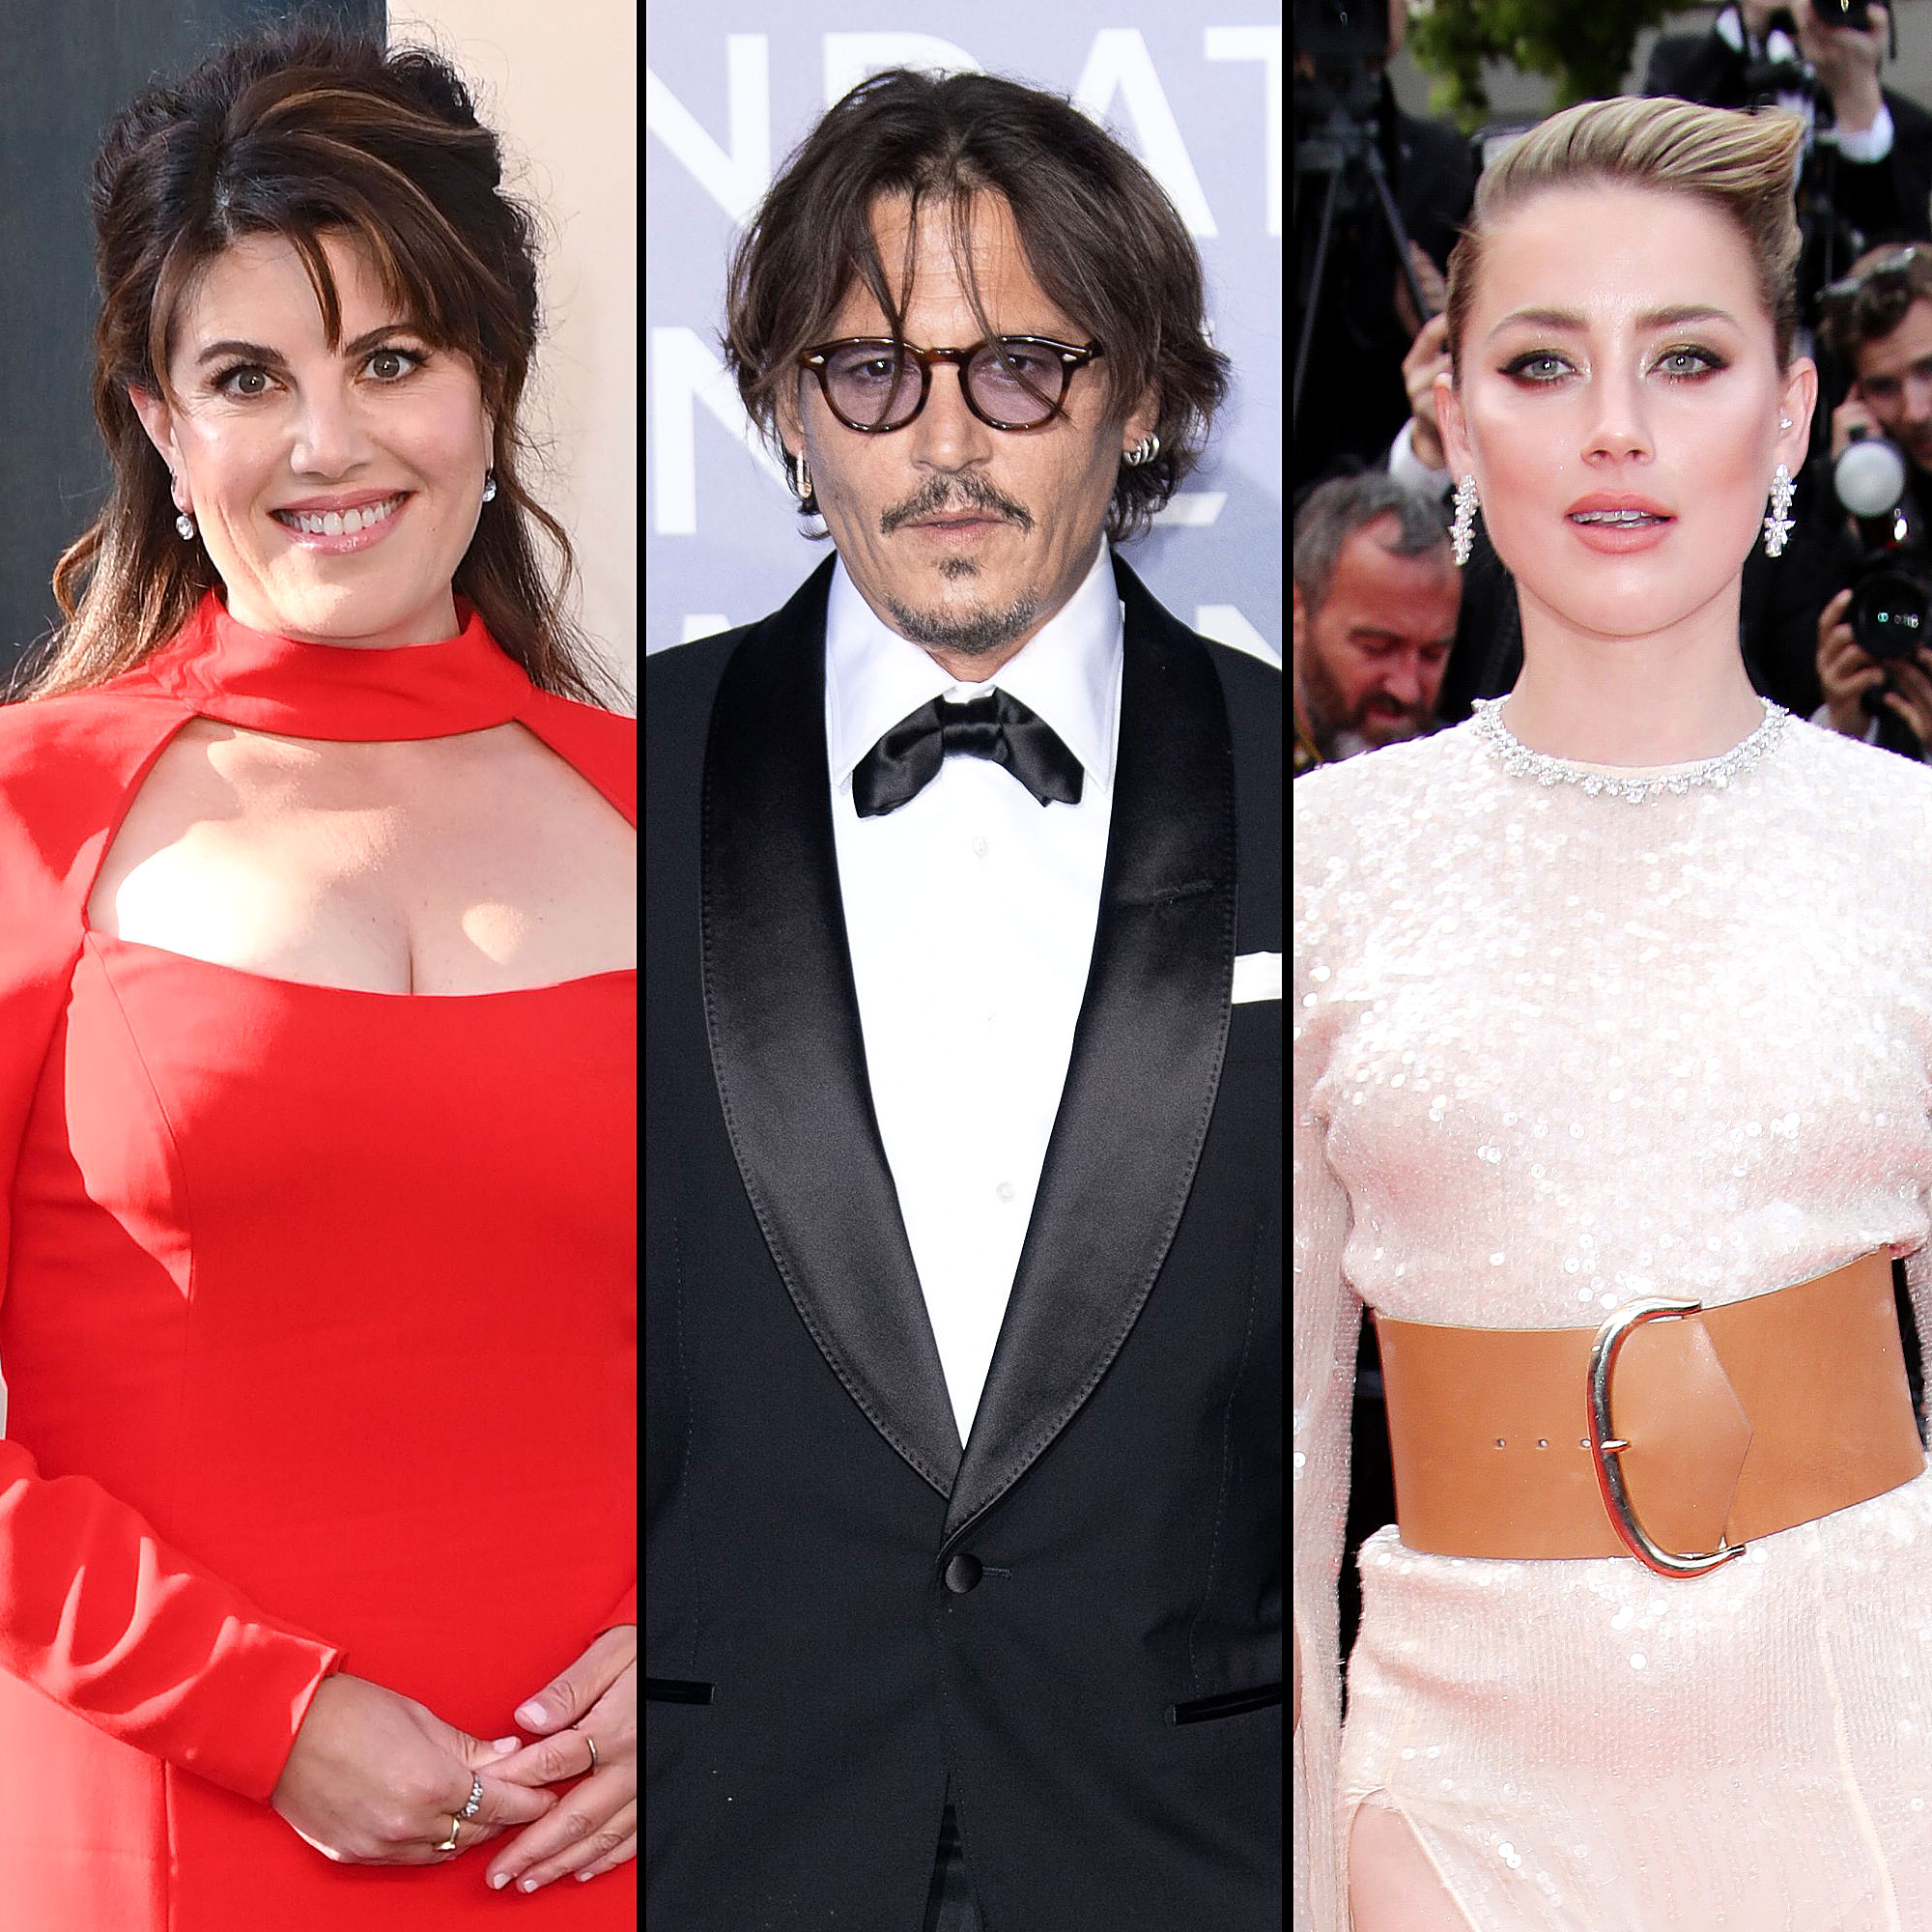 Italian Straight Male Porn Stars - Johnny Depp, Amber Heard's Trial: Drew Barrymore, More Stars React